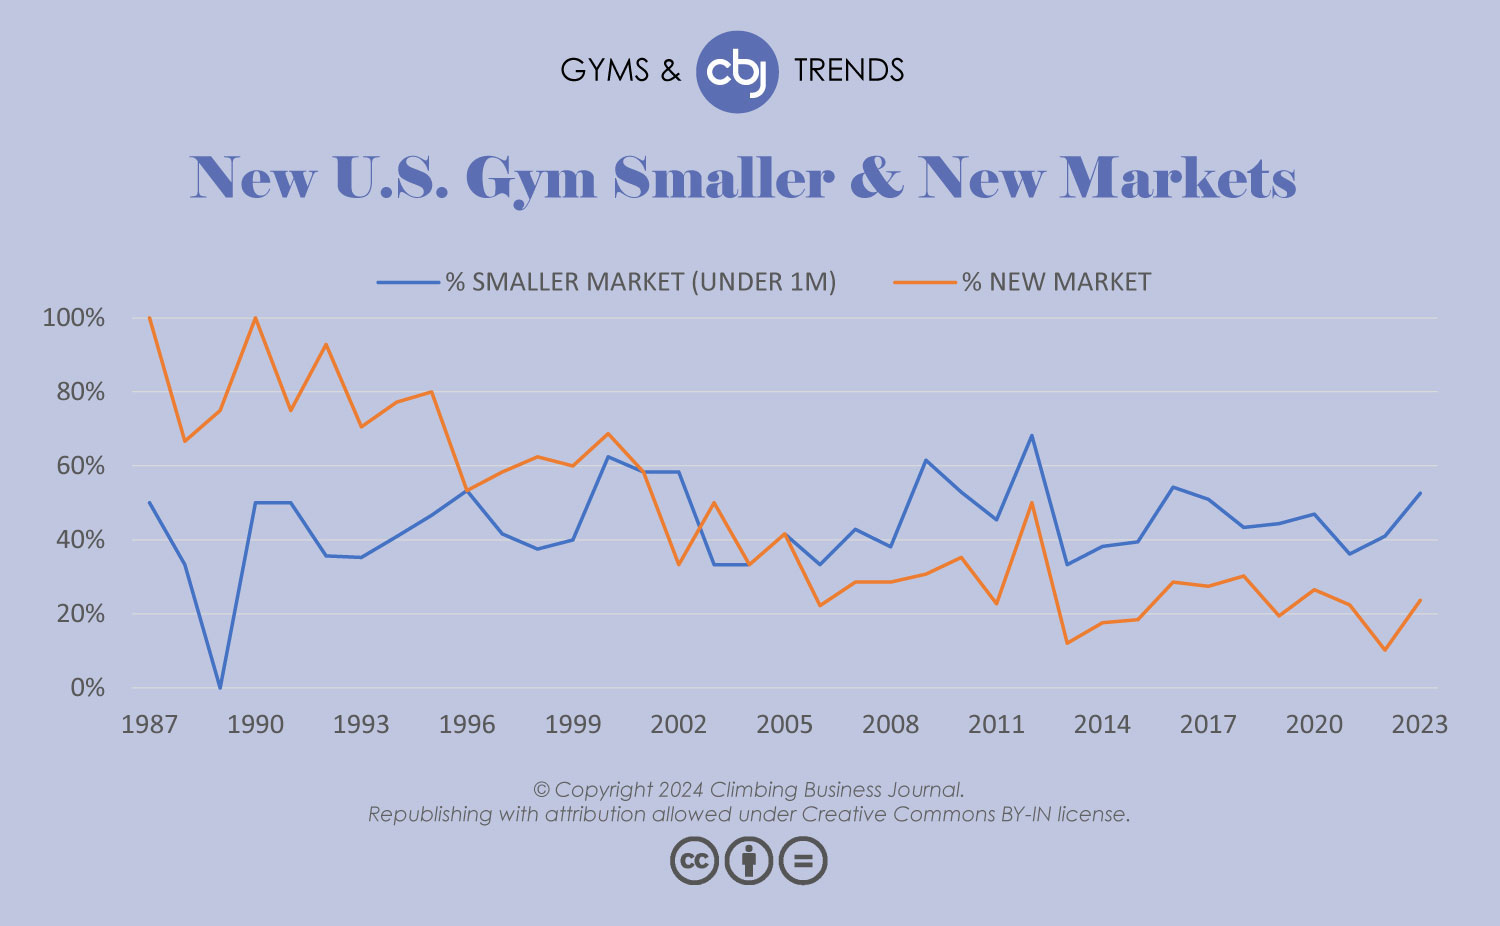 New U.S. Gym Smaller & New Markets